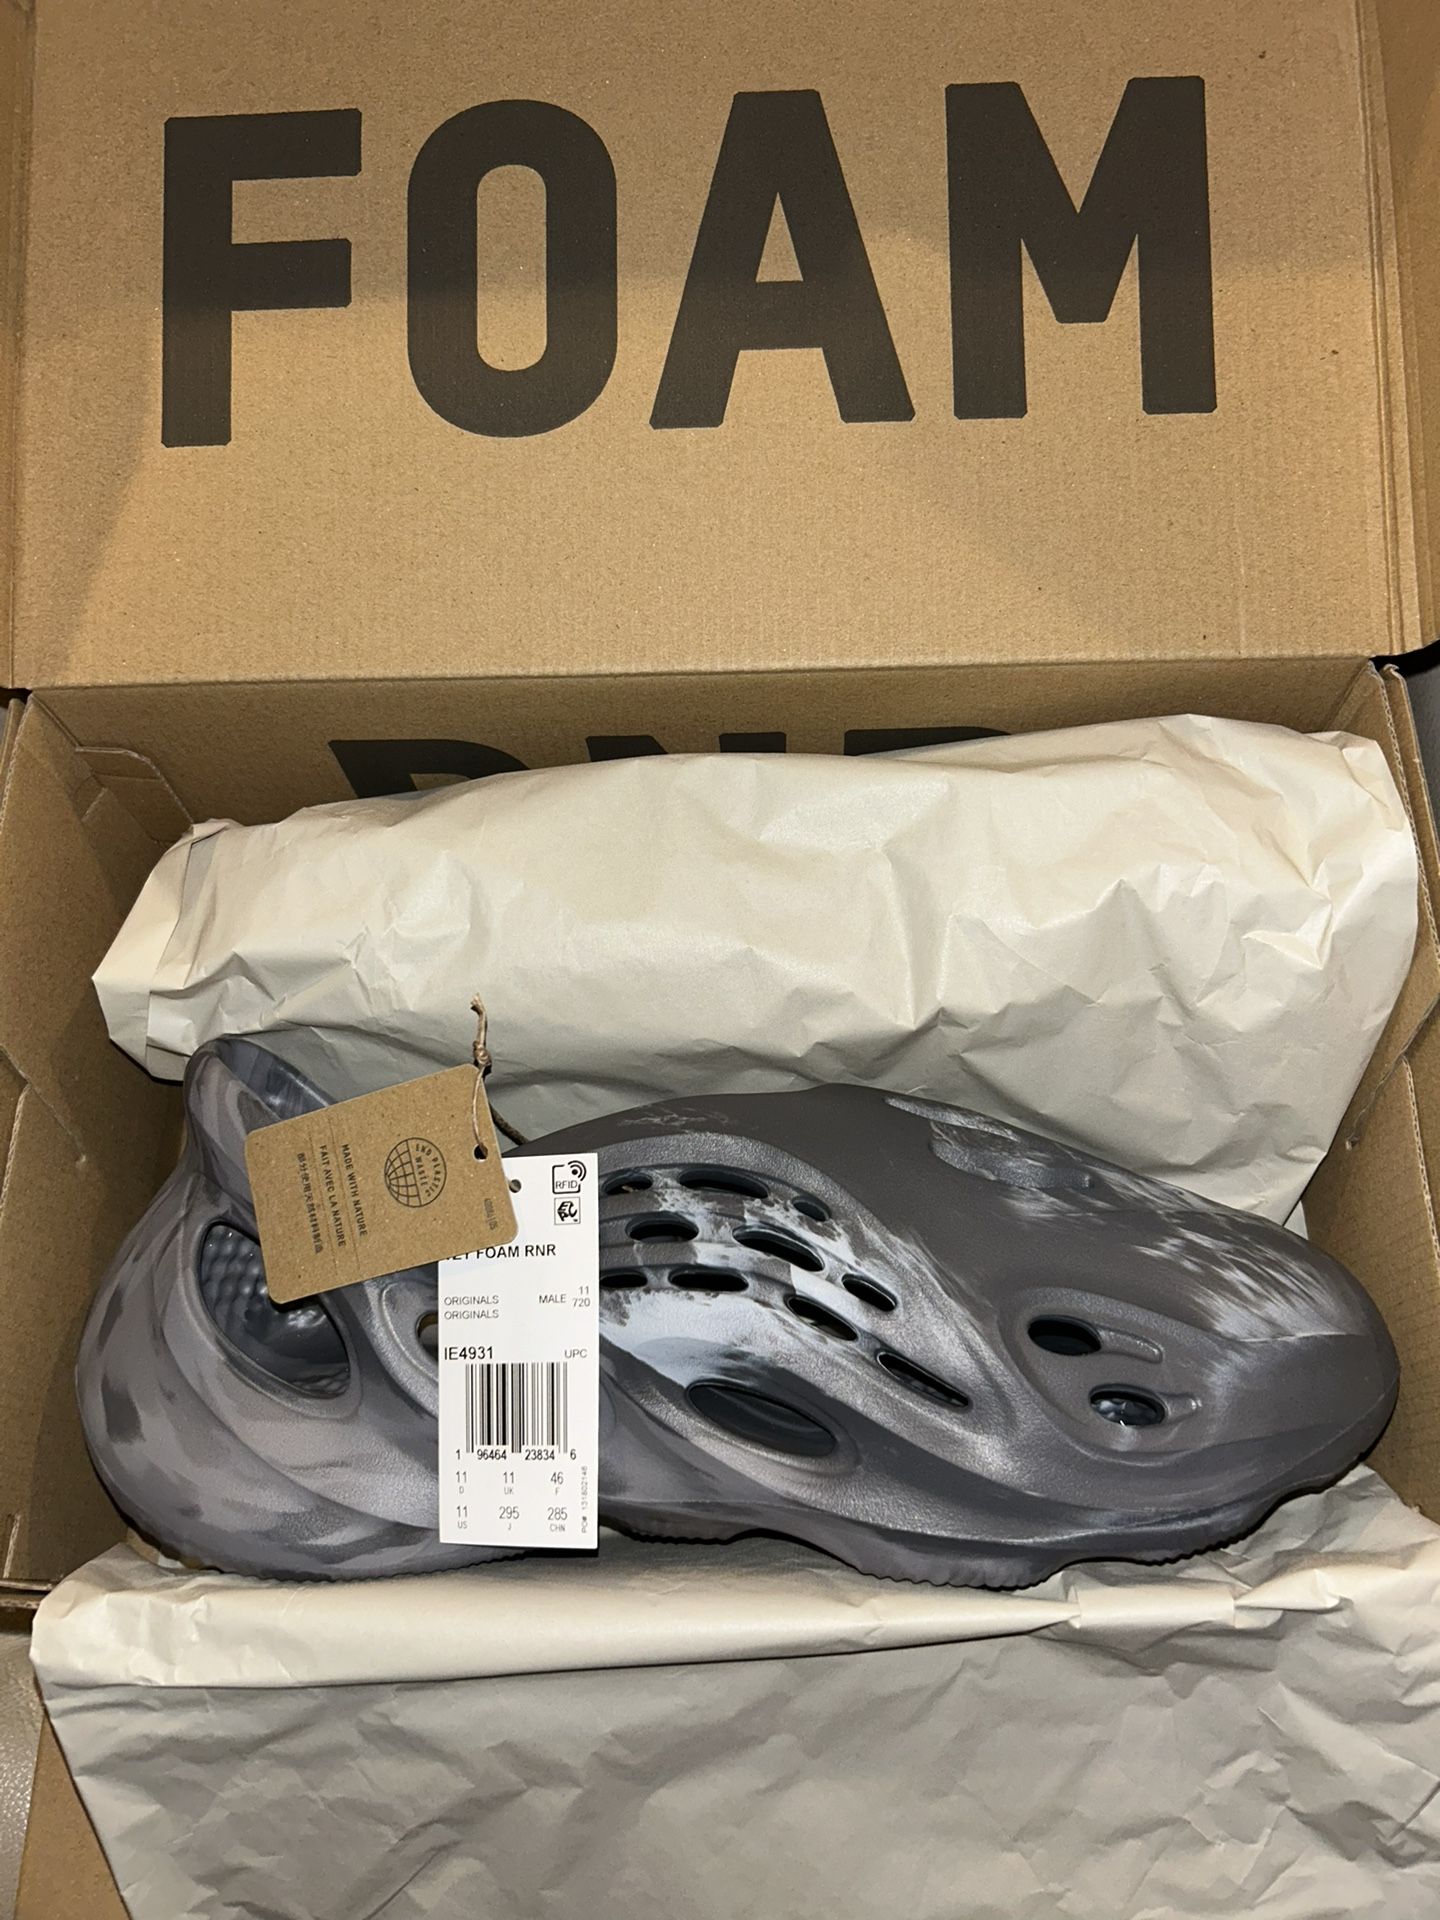 Adidas Yeezy Foam Runner MX Granite Size 11 NEW